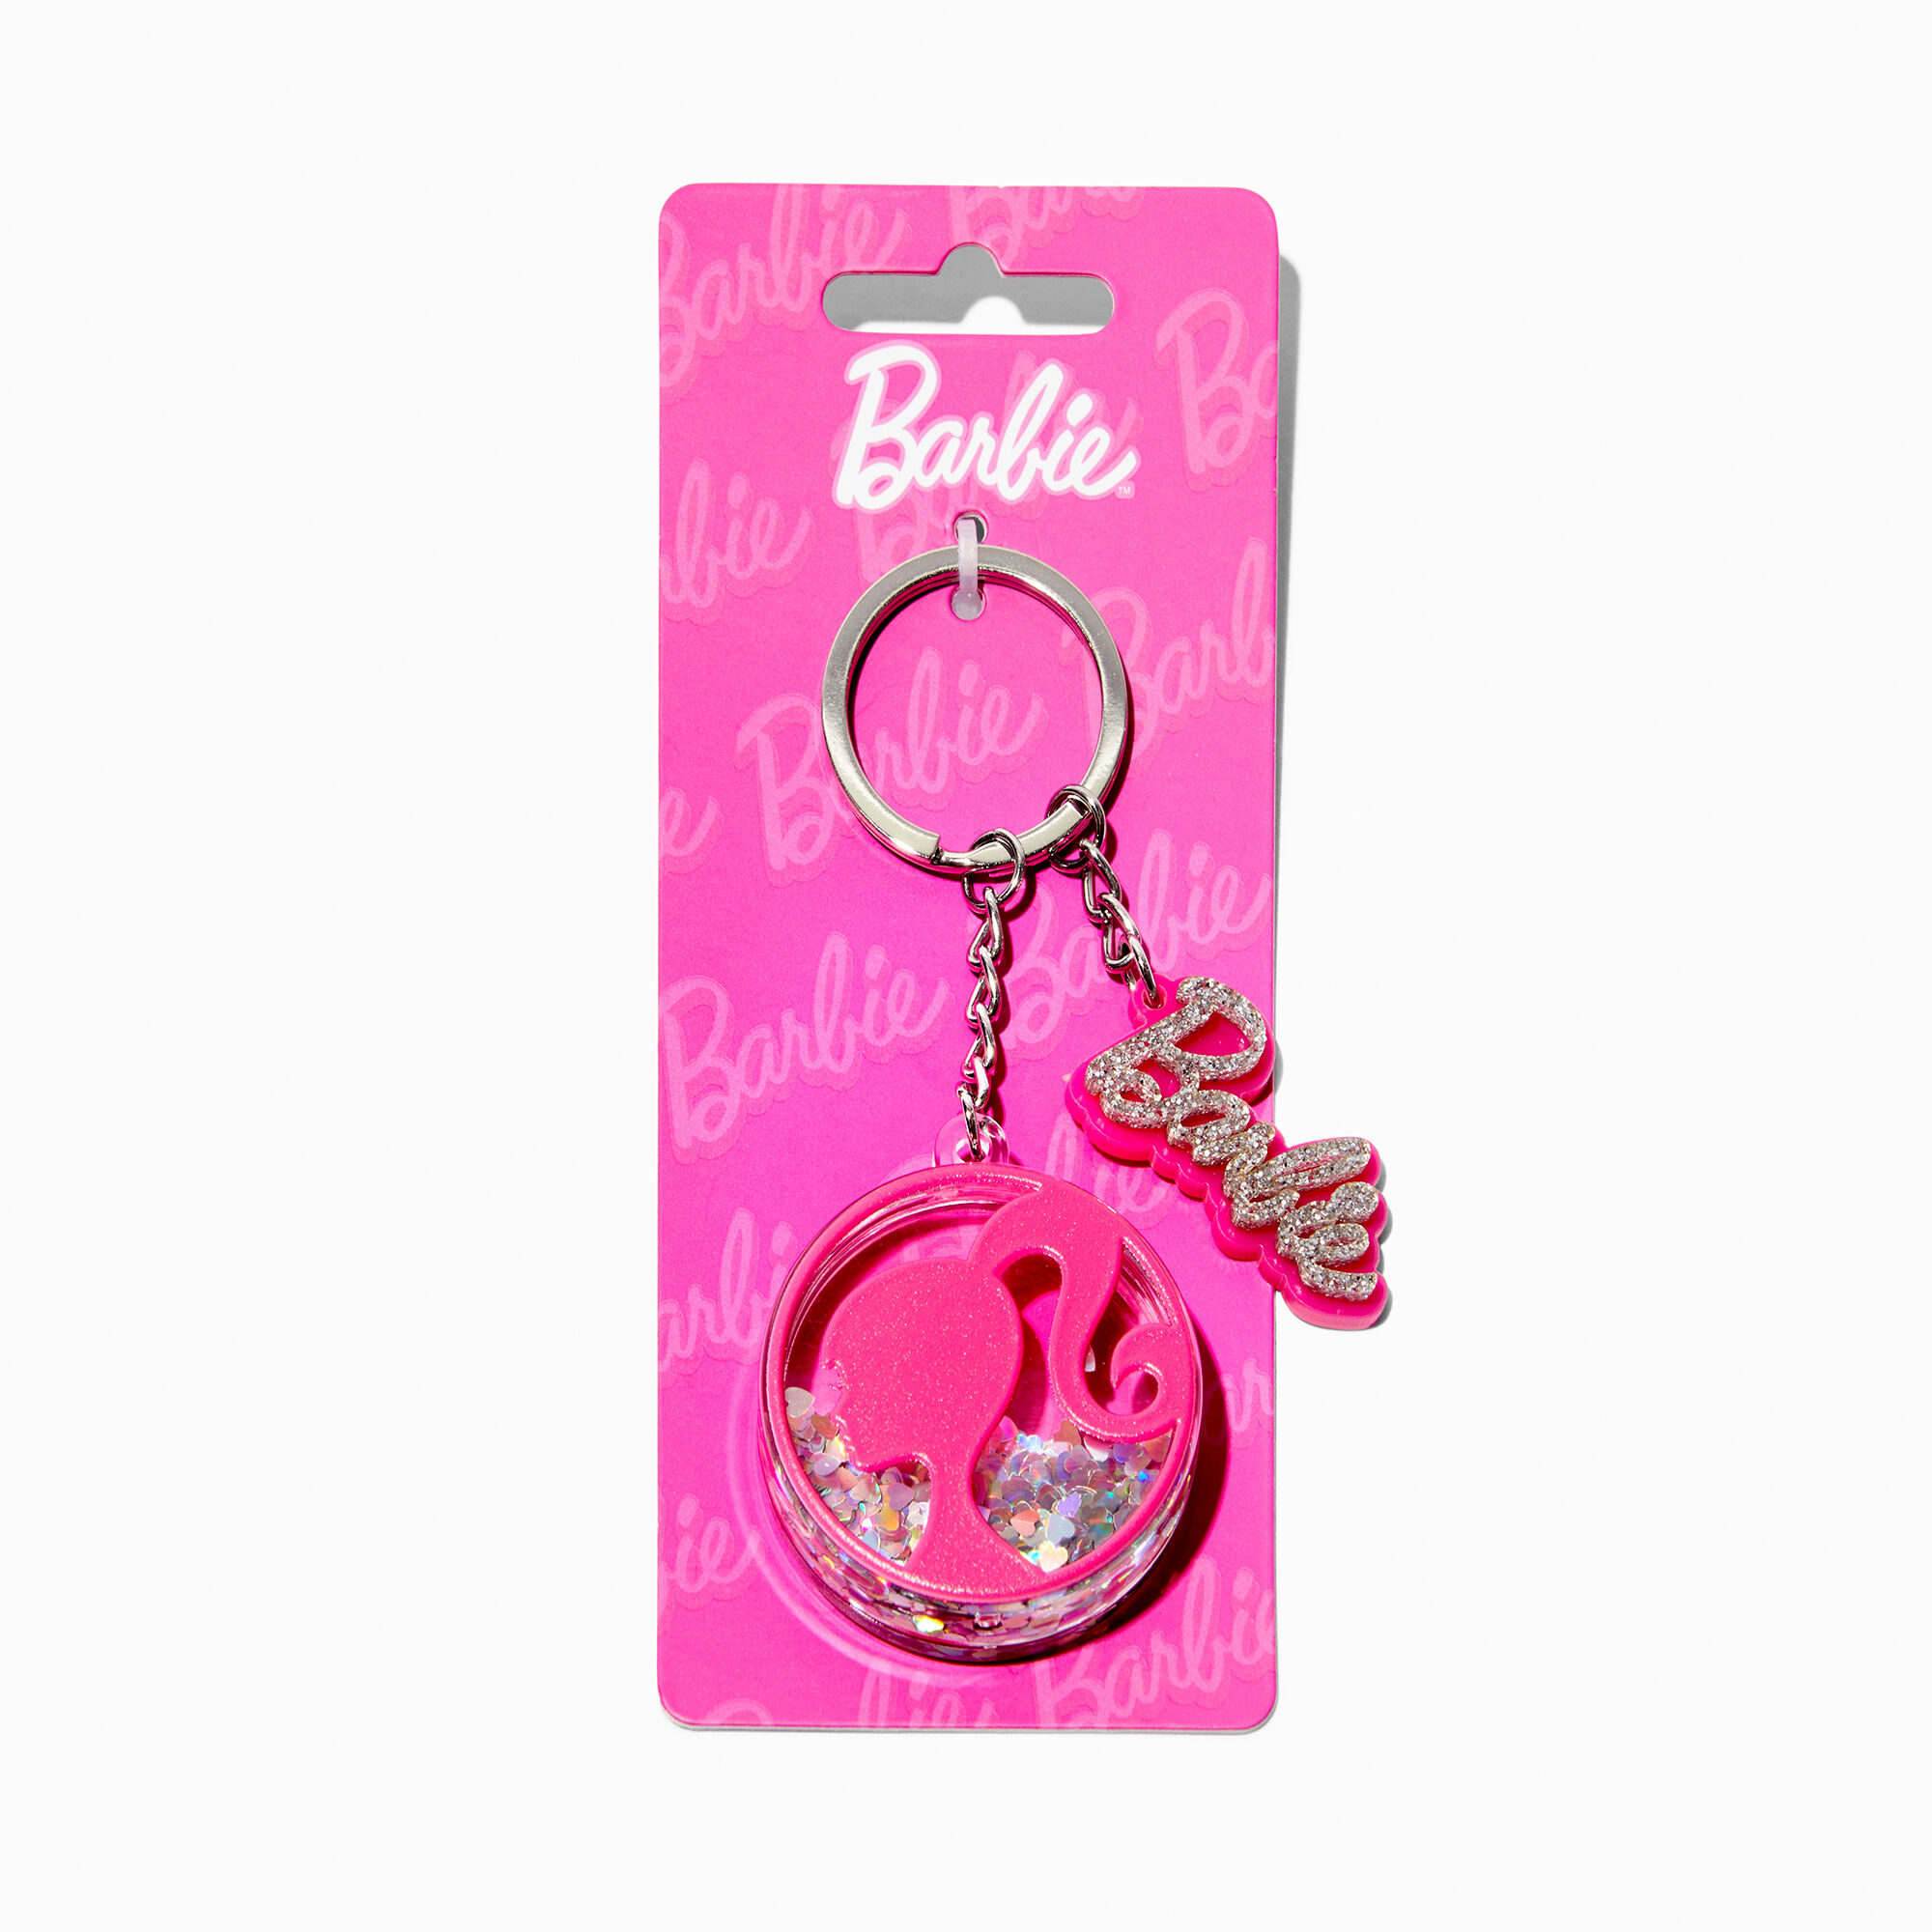 View Claires Barbie Glitter Keychain Pink information